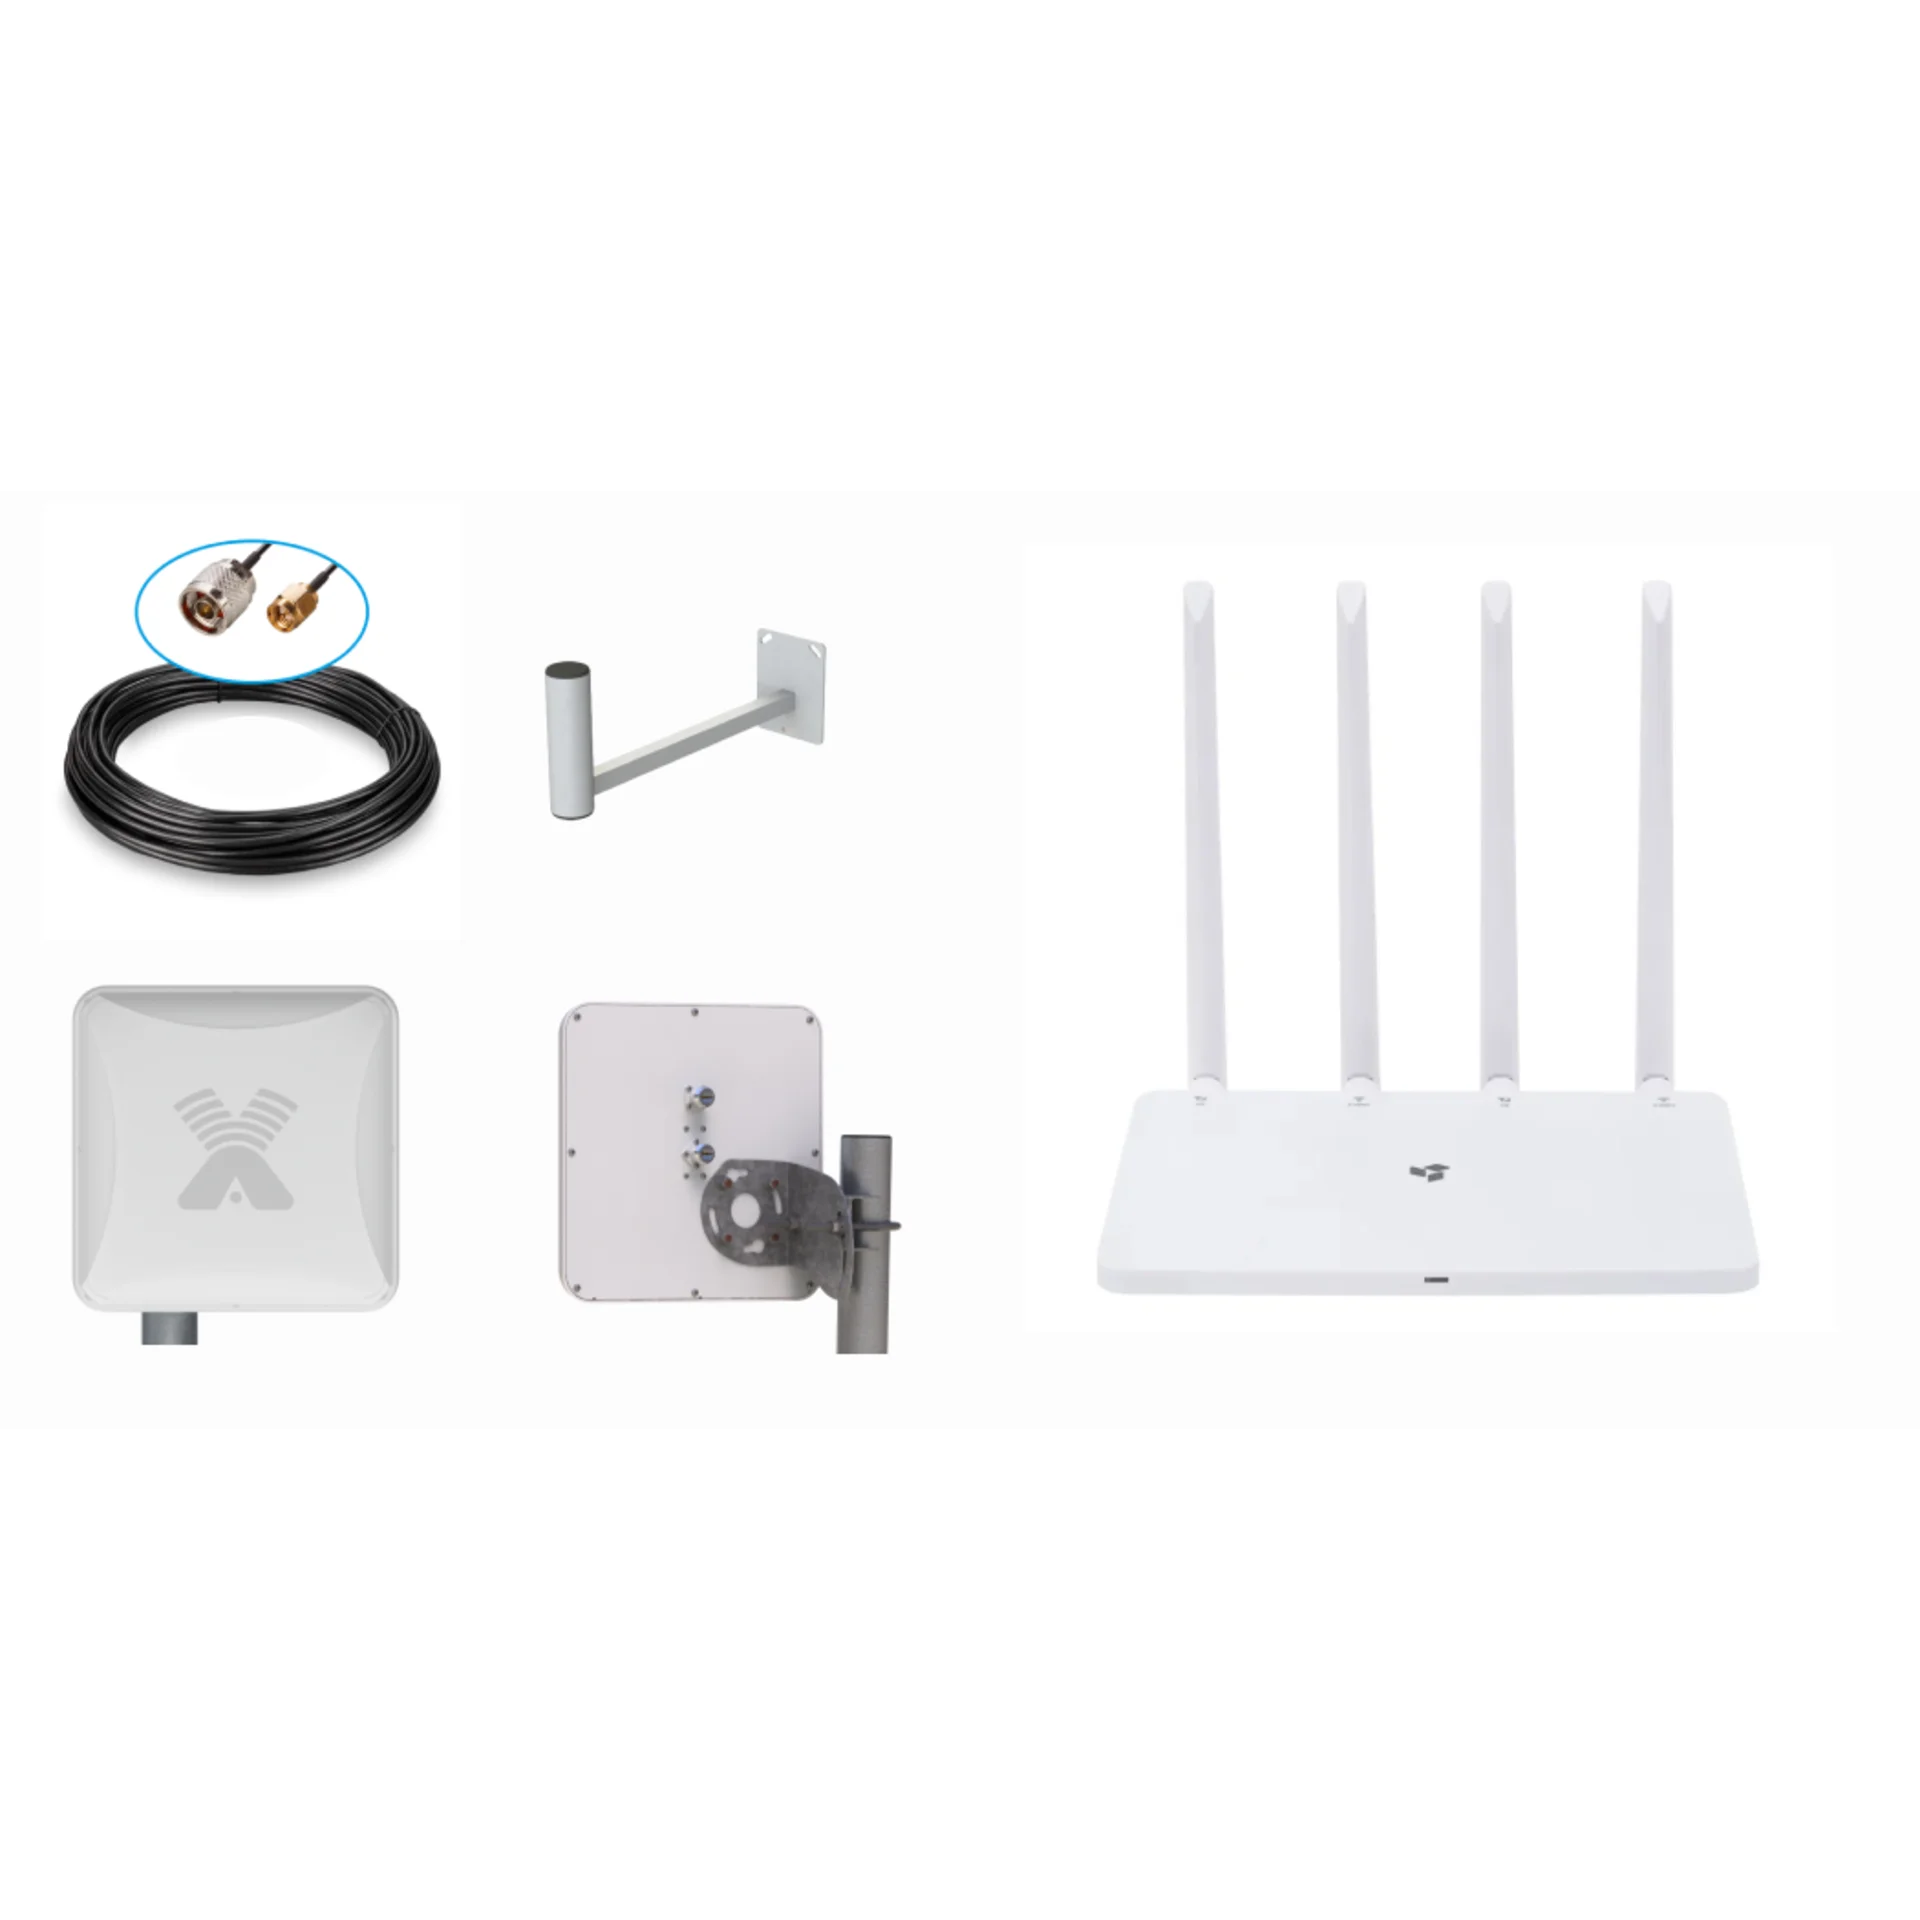 SNR-RT420-F21-LTE-PETRA-BB-MIMO - Комплект 3G/4G интернета с Wi-Fi купить в Казани 	Набор SNR LTE + Антэкс	1. Роутер SNR-RT420-F21-LTE - 1 шт	2. Внешняя антенна Антэкс PETRA BB MIMO -